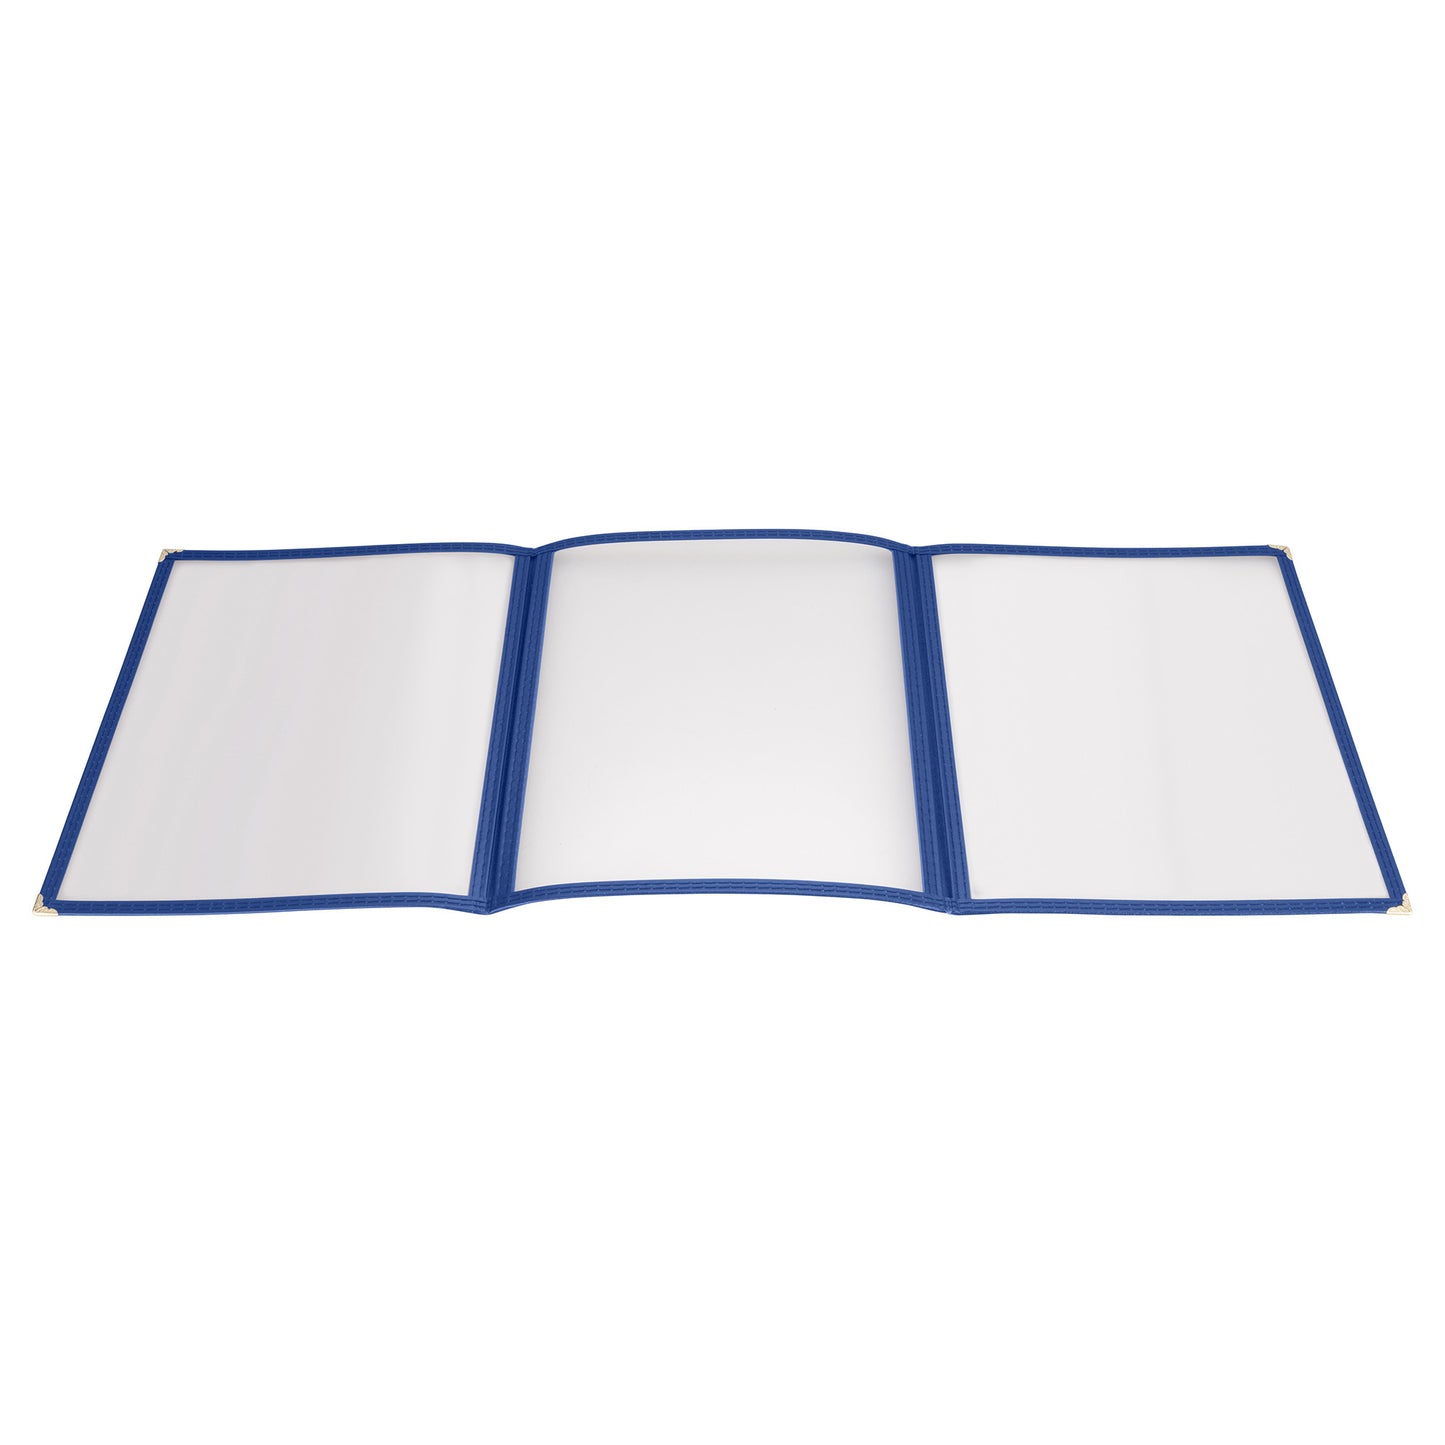 PMCT-9B - Tri-Fold Triple Panel Menu Cover, 9-1/2" x 12-1/8" - Blue